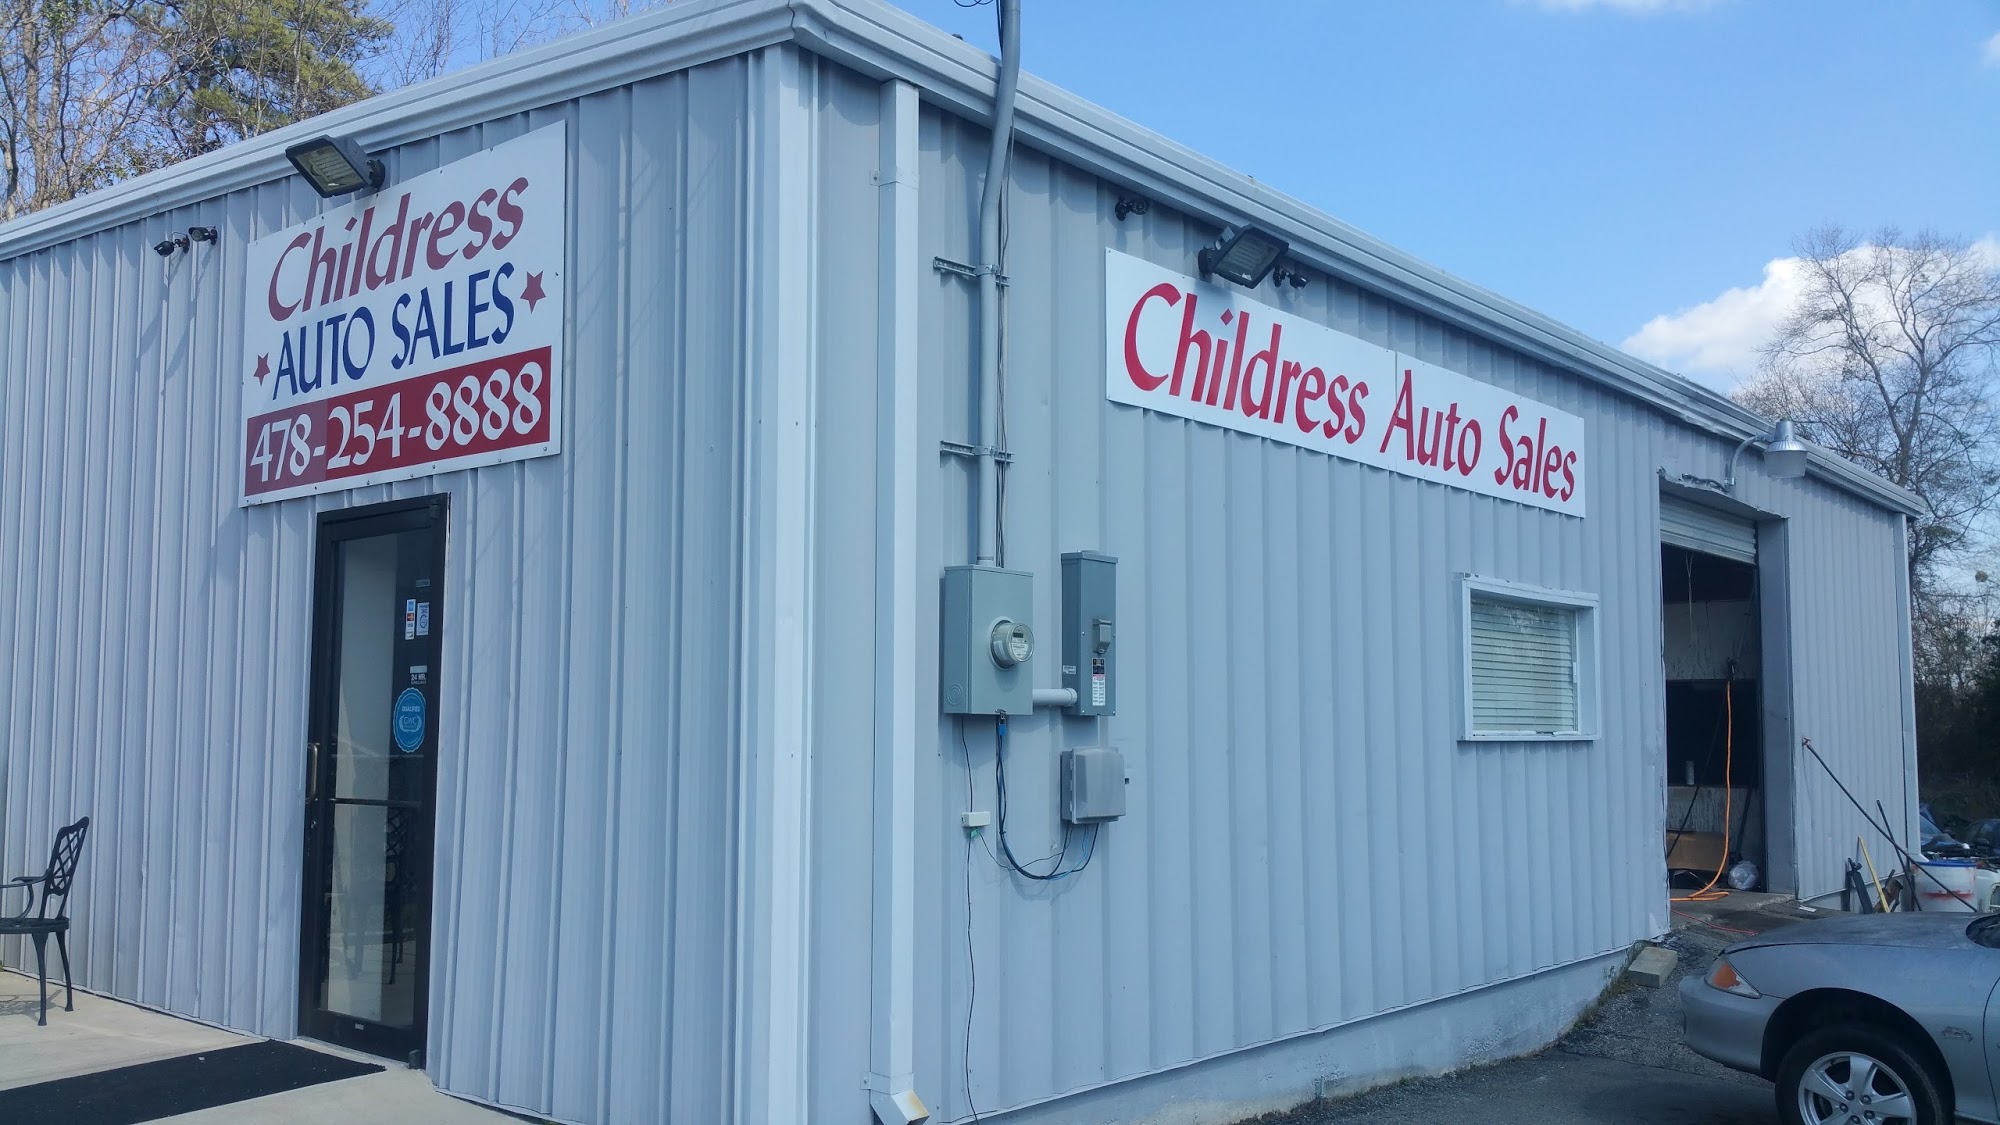 Childress Auto Sales